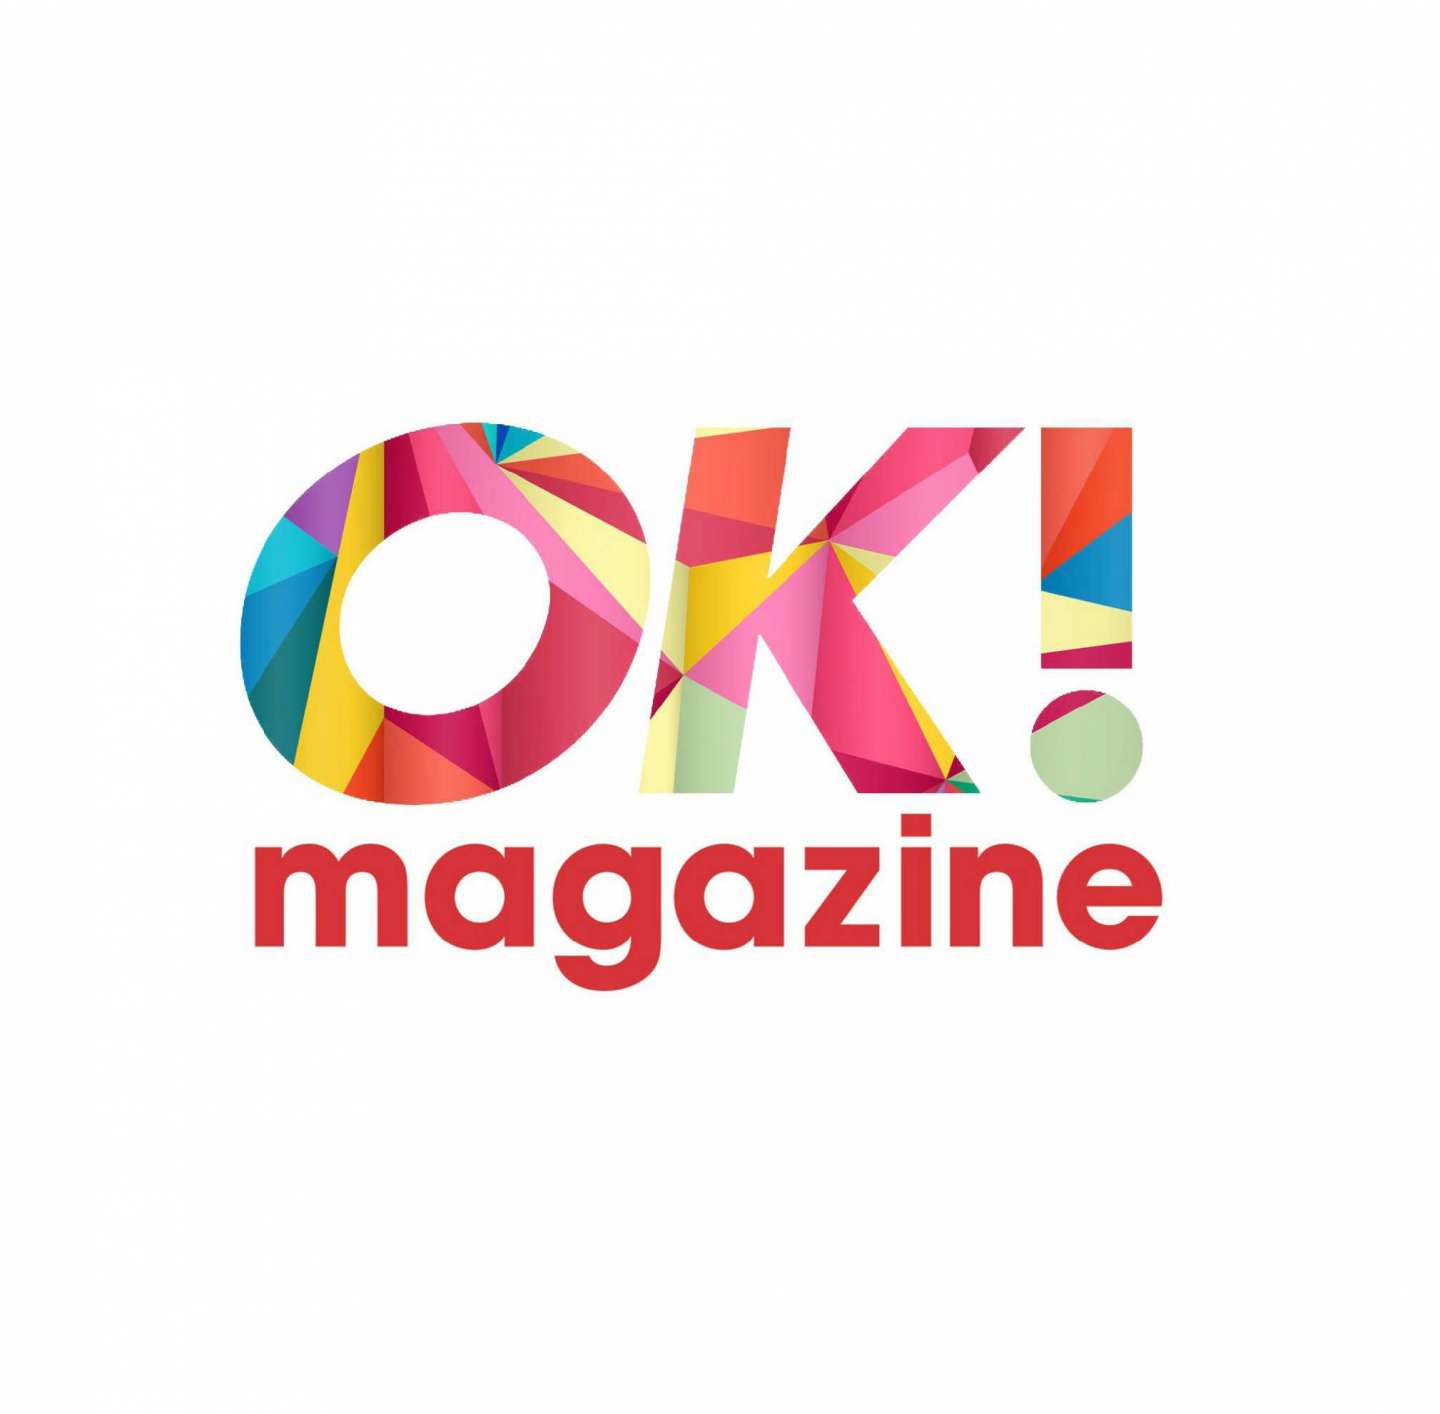 OK! Magazine